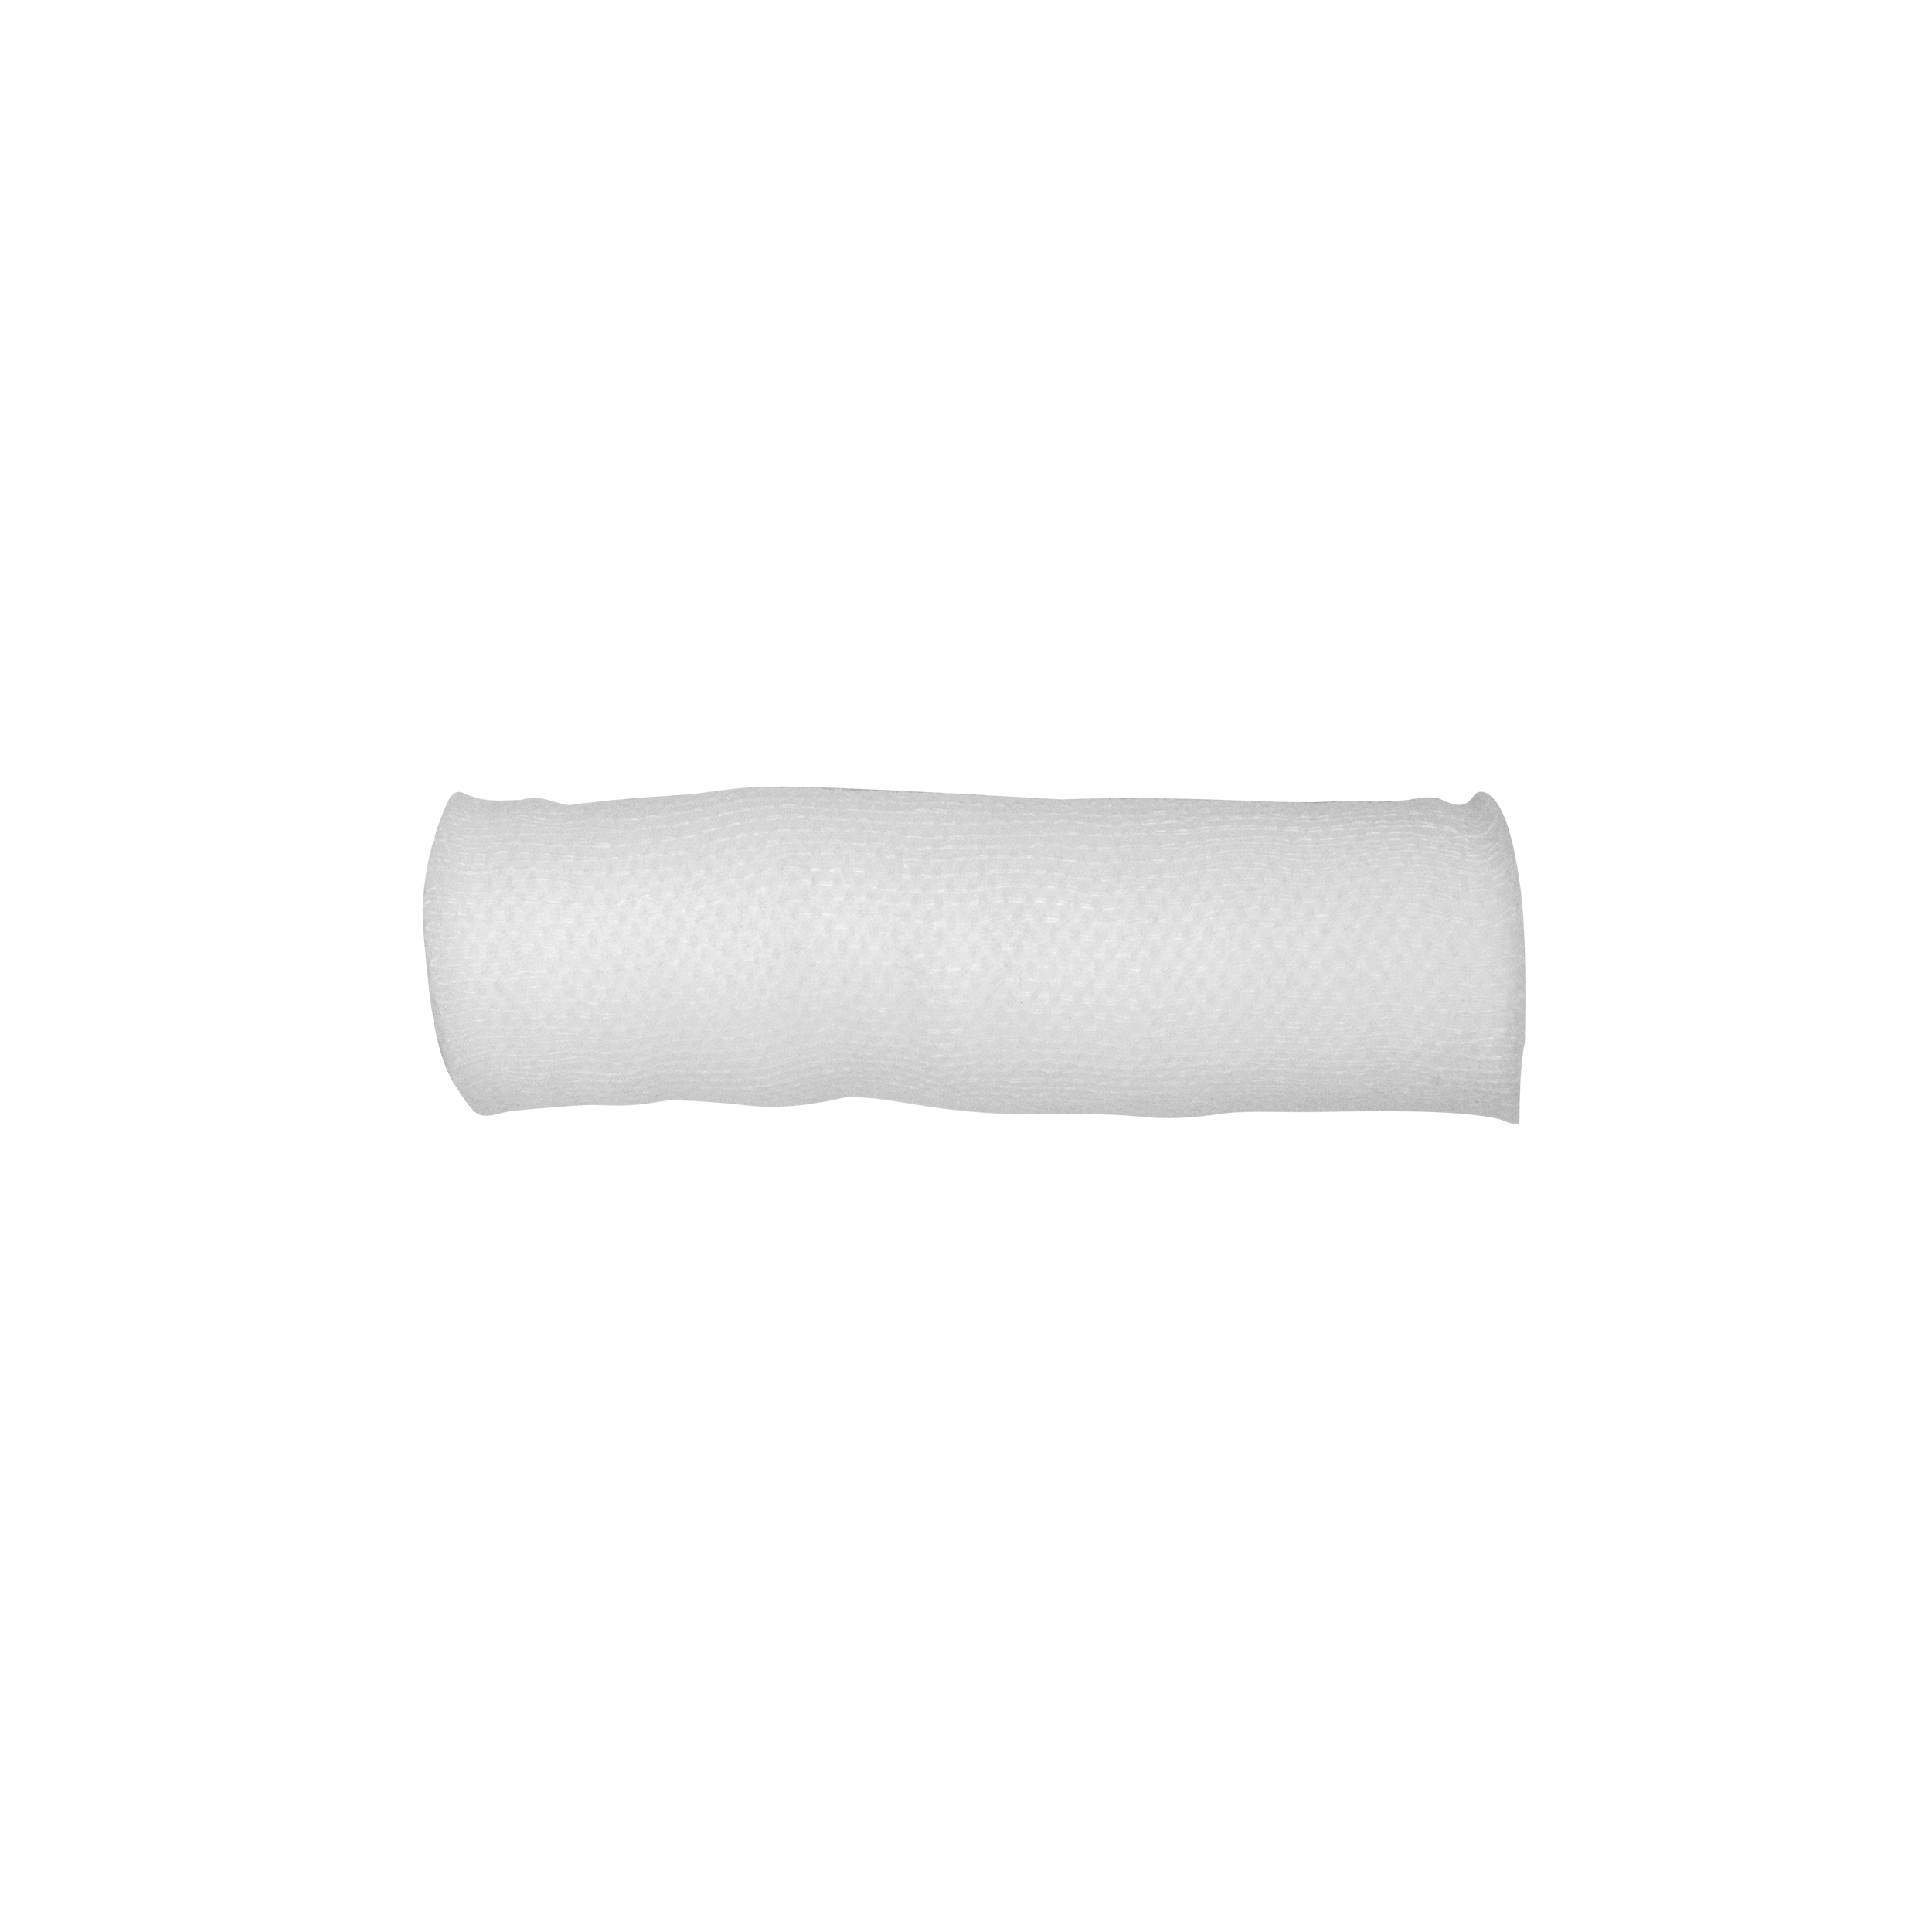 Stretch Gauze Bandage Roll - 4